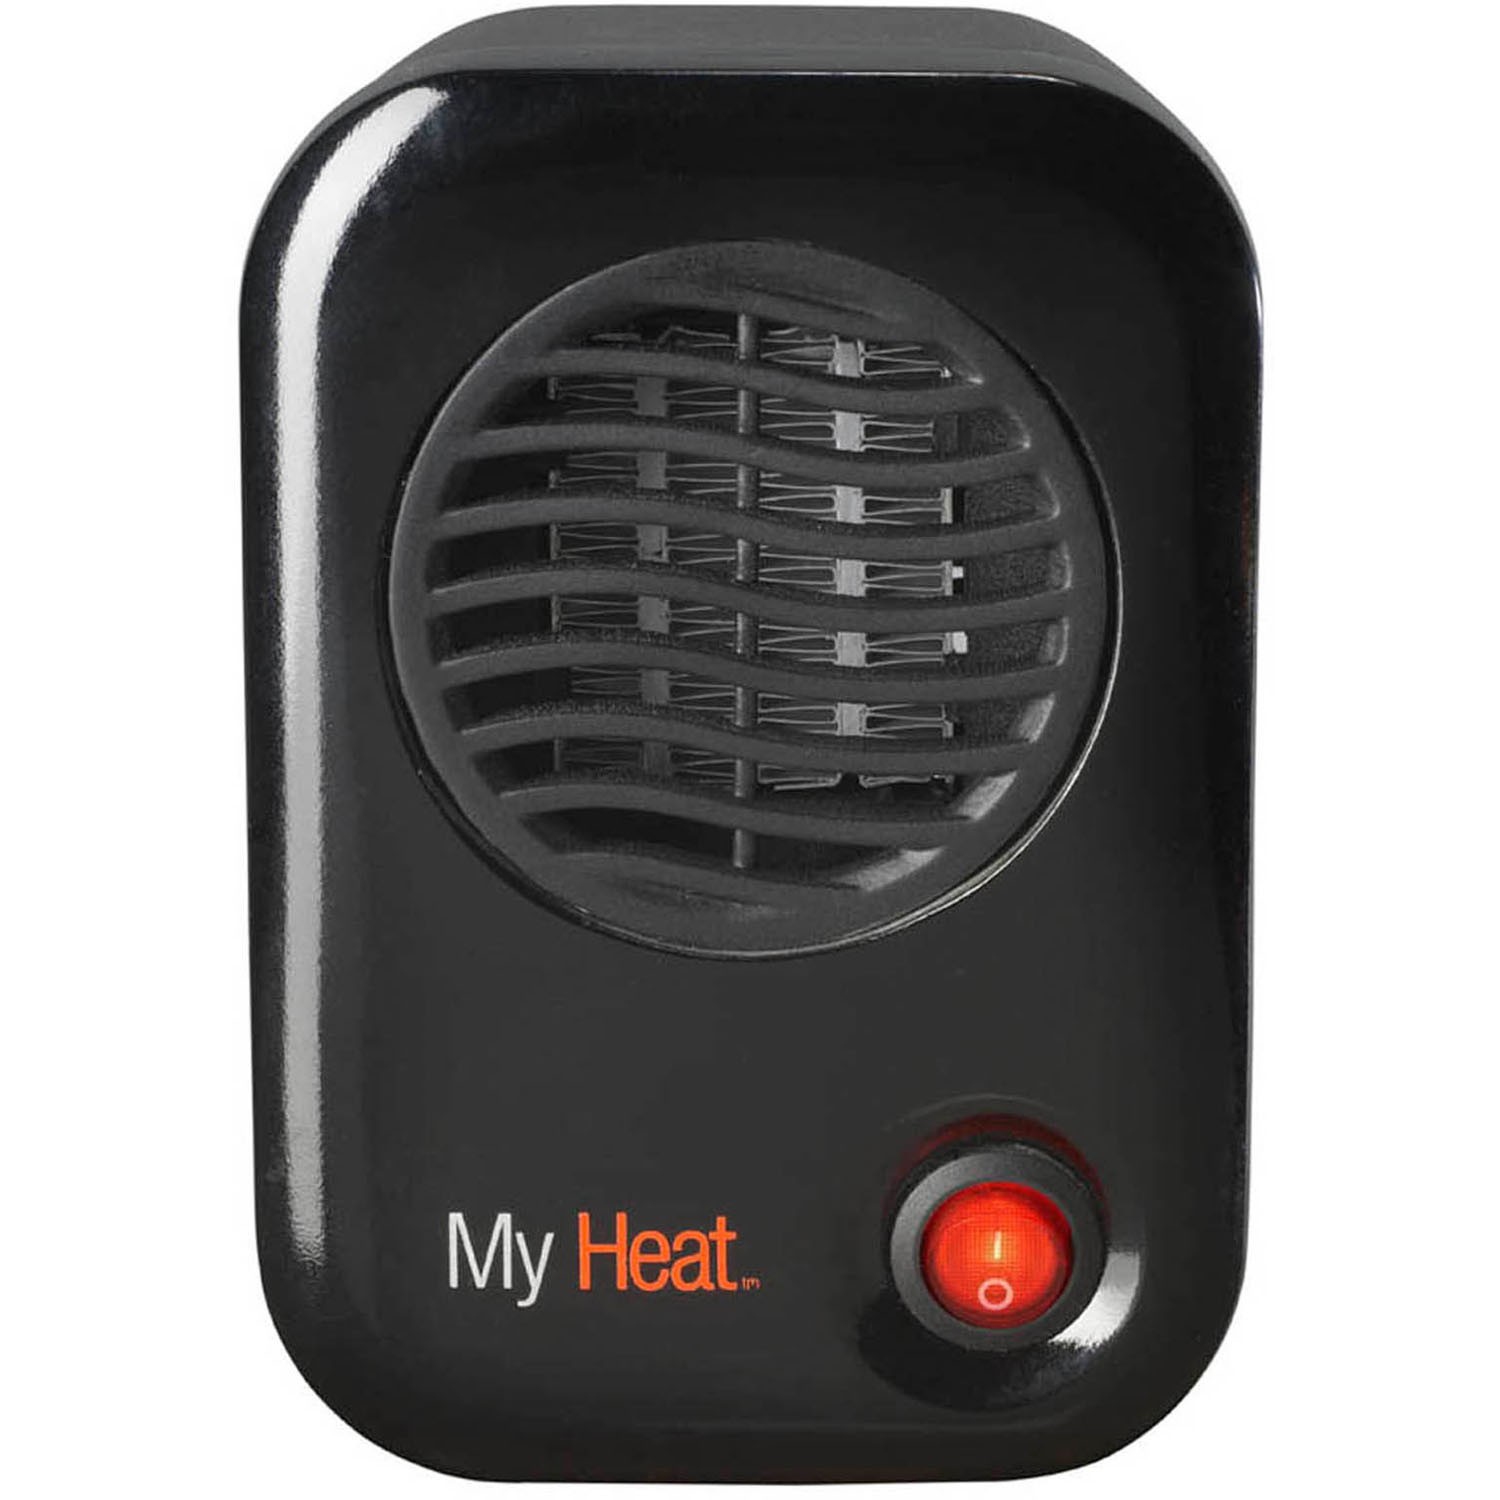 Lasko My Heat Personal Heater - Certified Refurbished